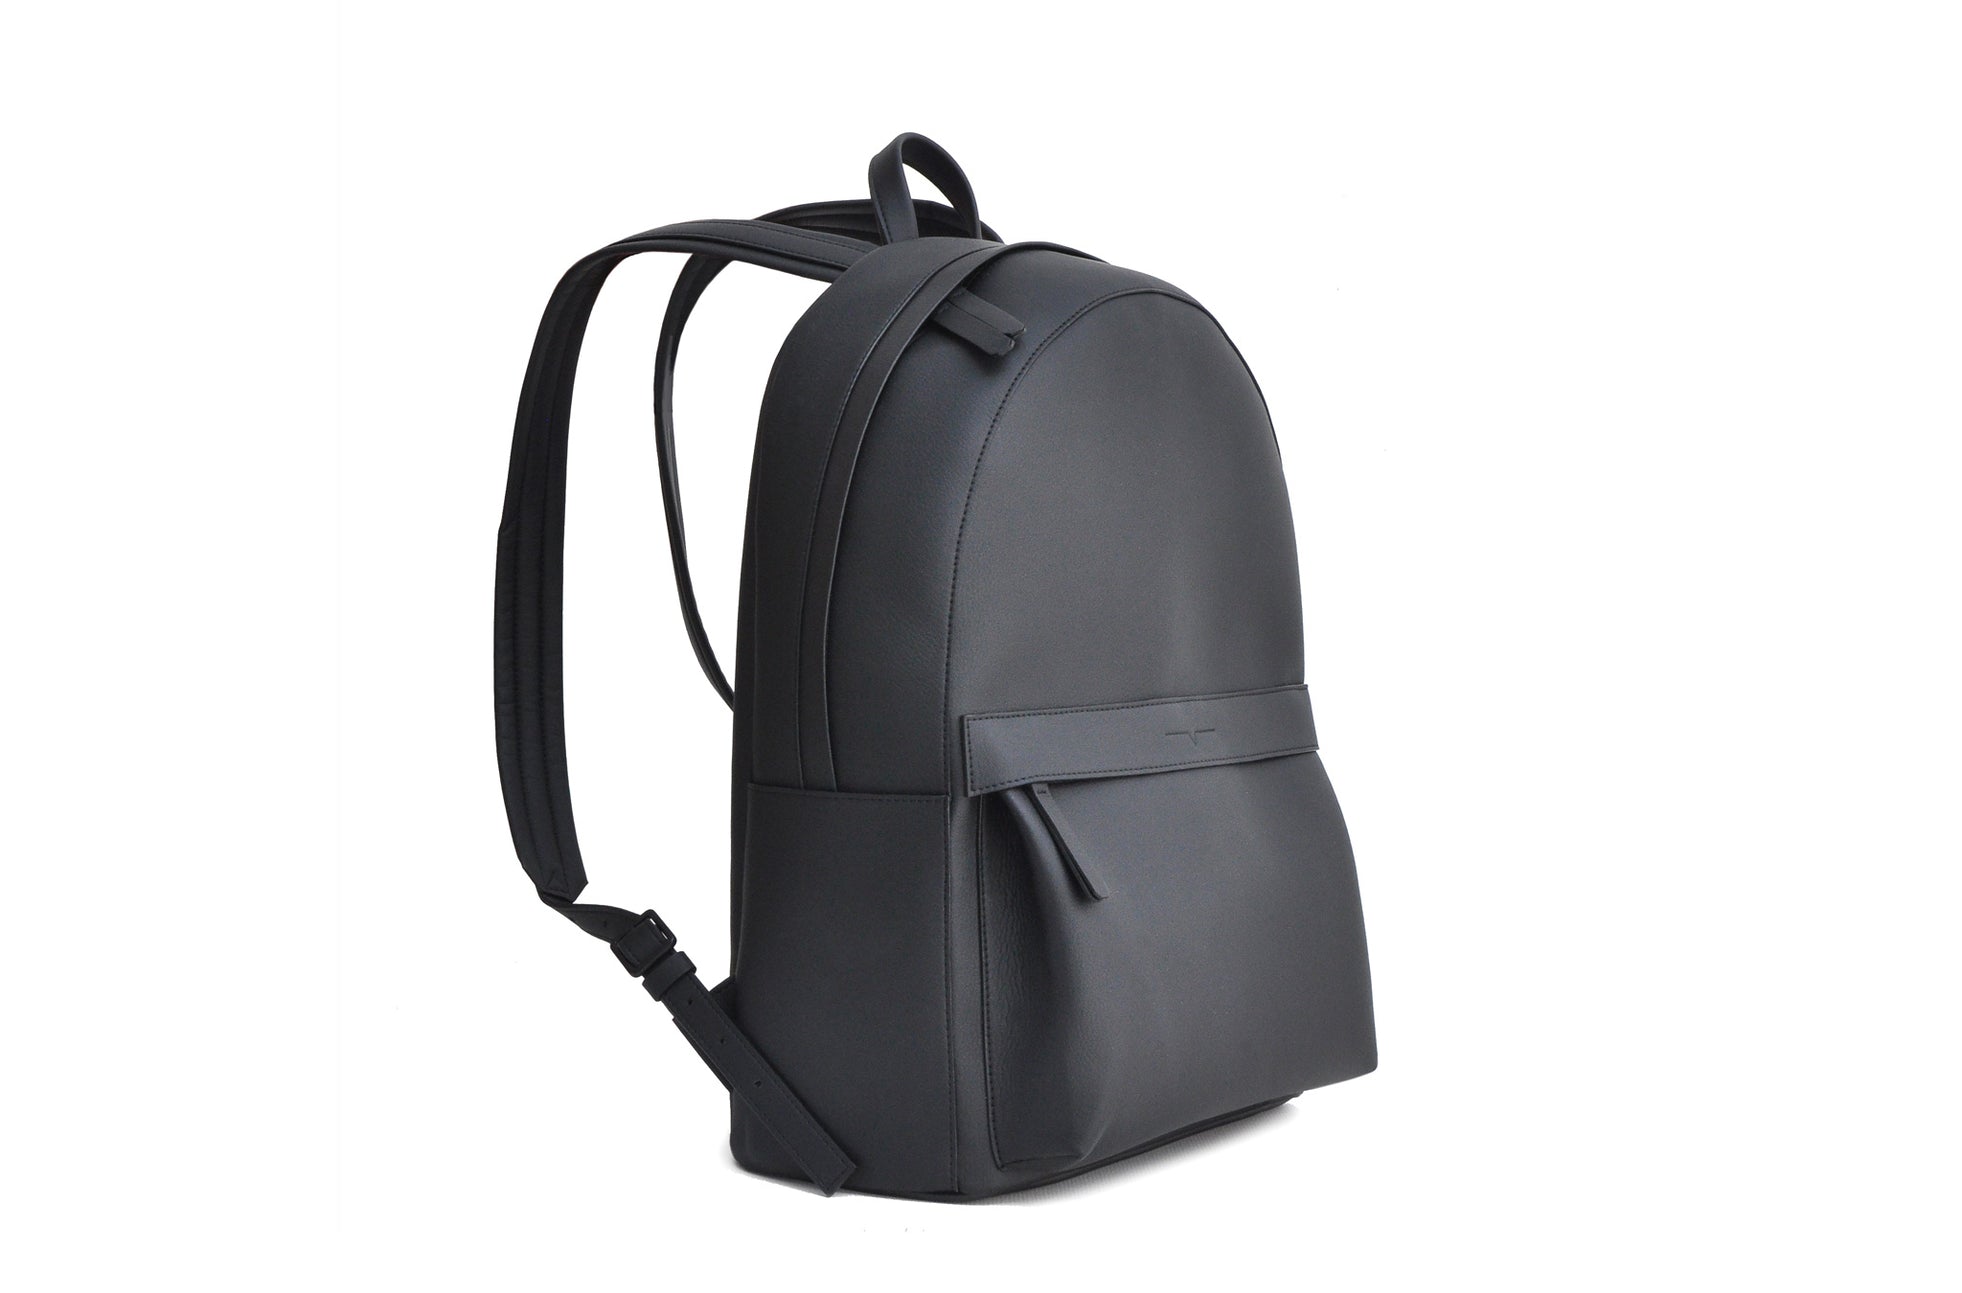 The Classic Backpack in Technik in Black image 4